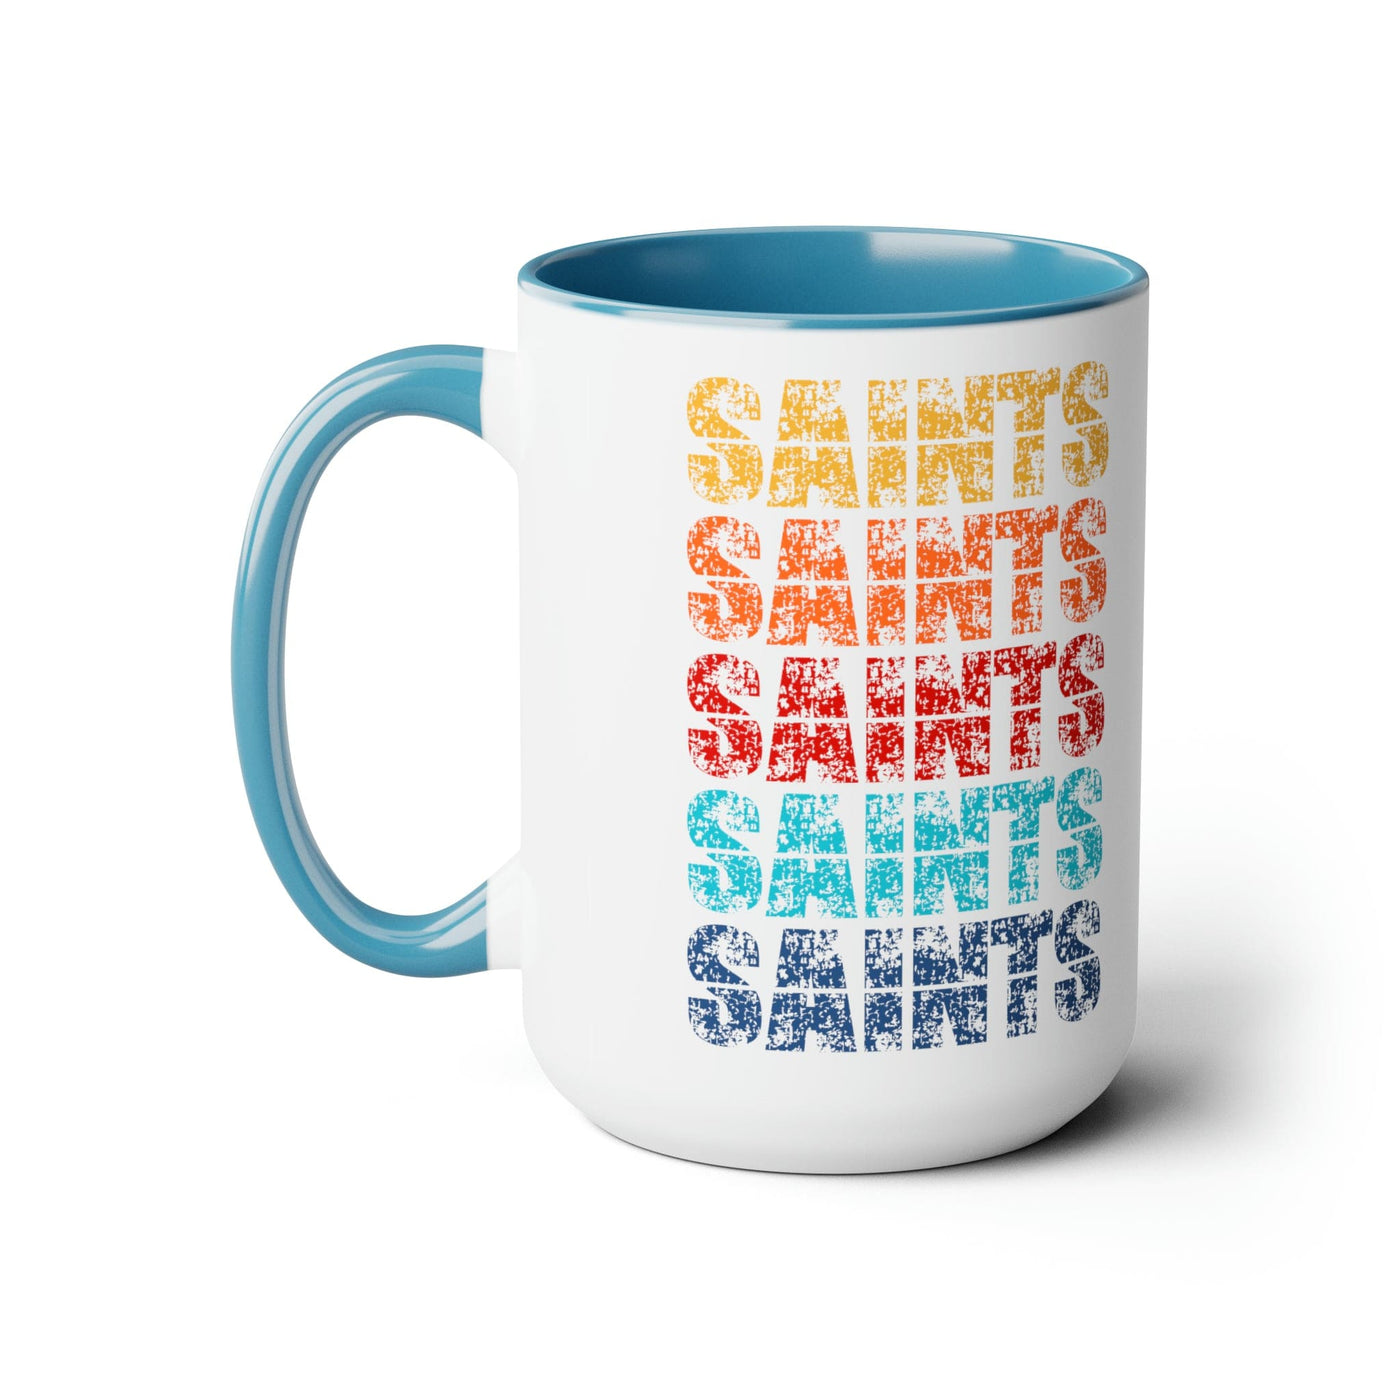 Accent Ceramic Coffee Mug 15oz - Saints Colorful Art Illustration - Decorative